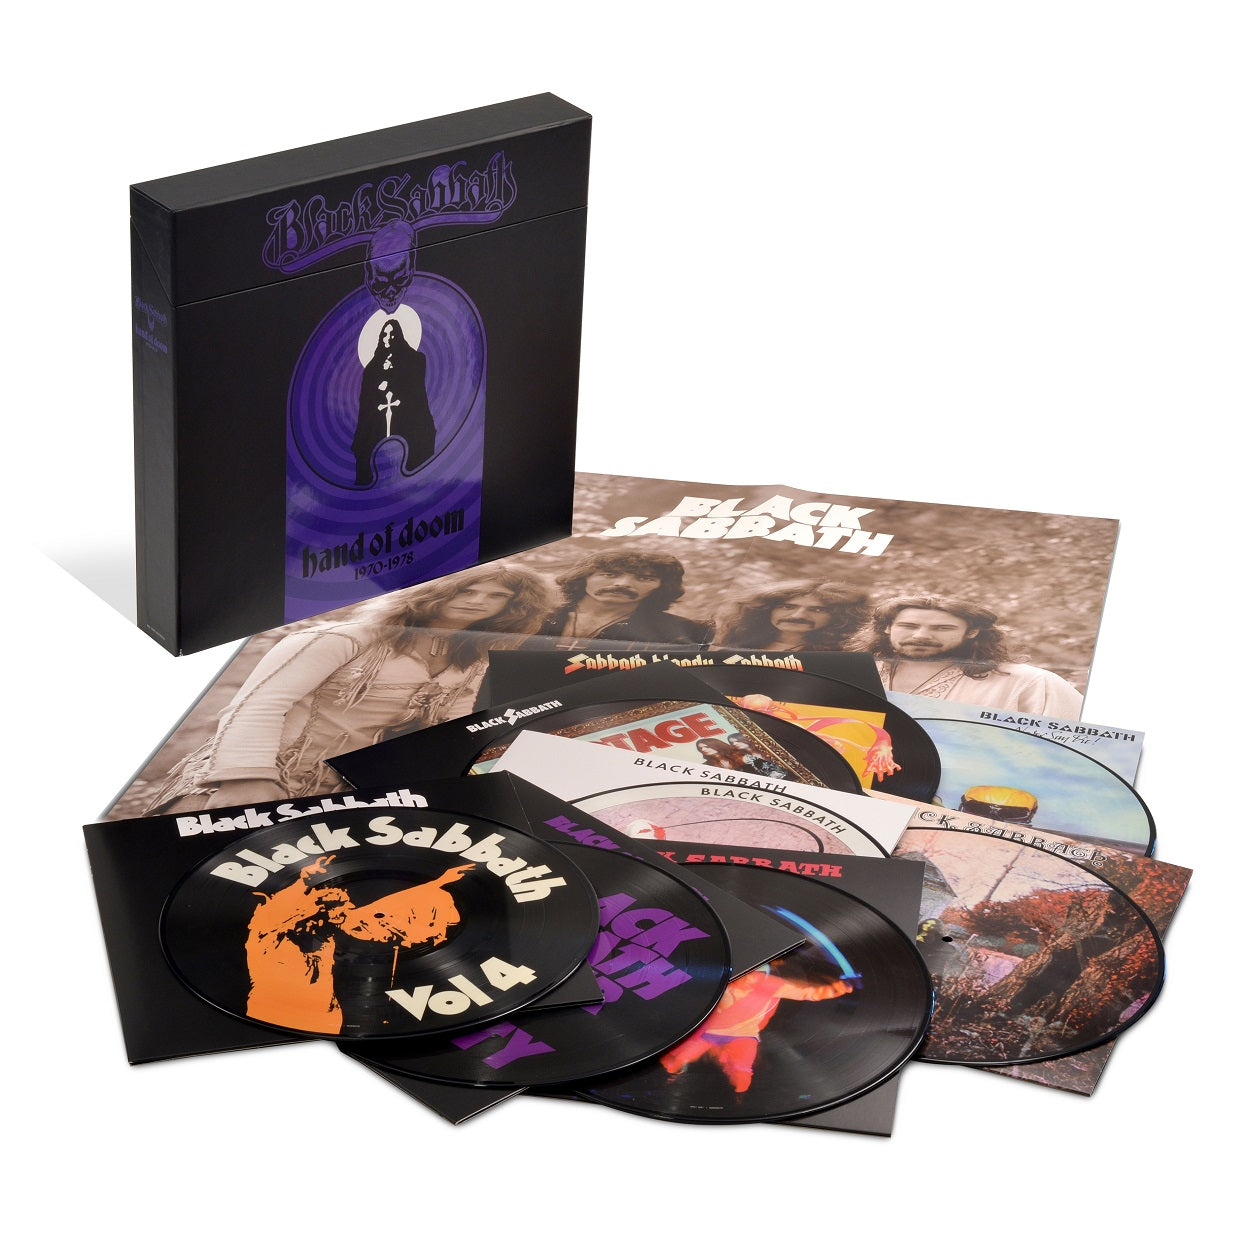 Black Sabbath - Hand Of Doom 1970 - 1978: Super Deluxe Picture Disc 8LP Box Set